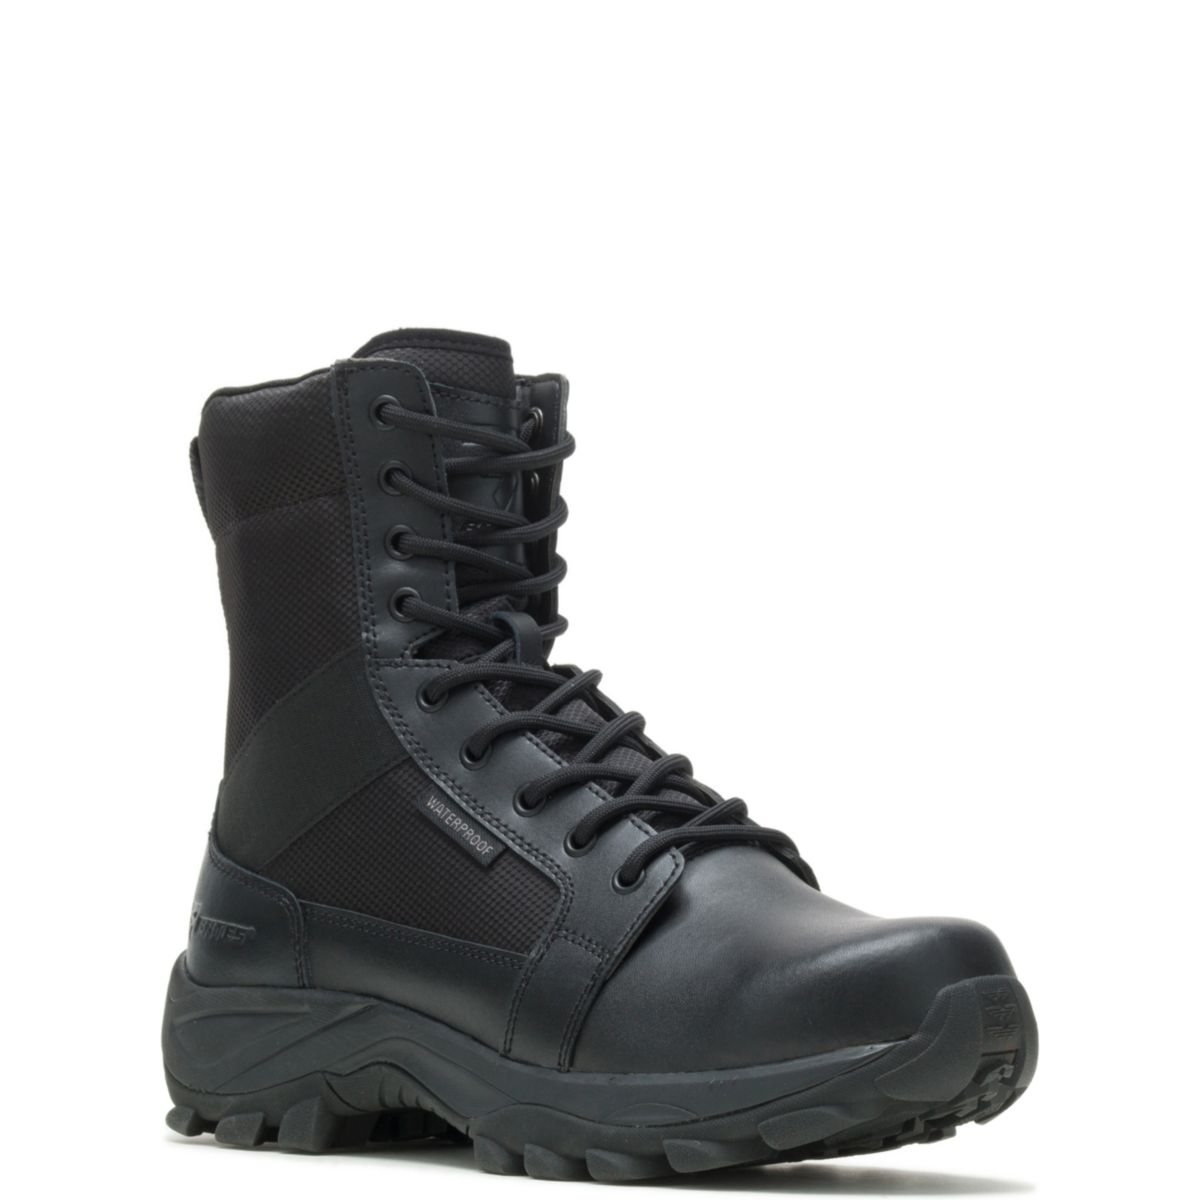 Bates Men's Fuse 8-inch Side Zip Waterproof Boot Black - E06508 BLACK - BLACK, 10.5